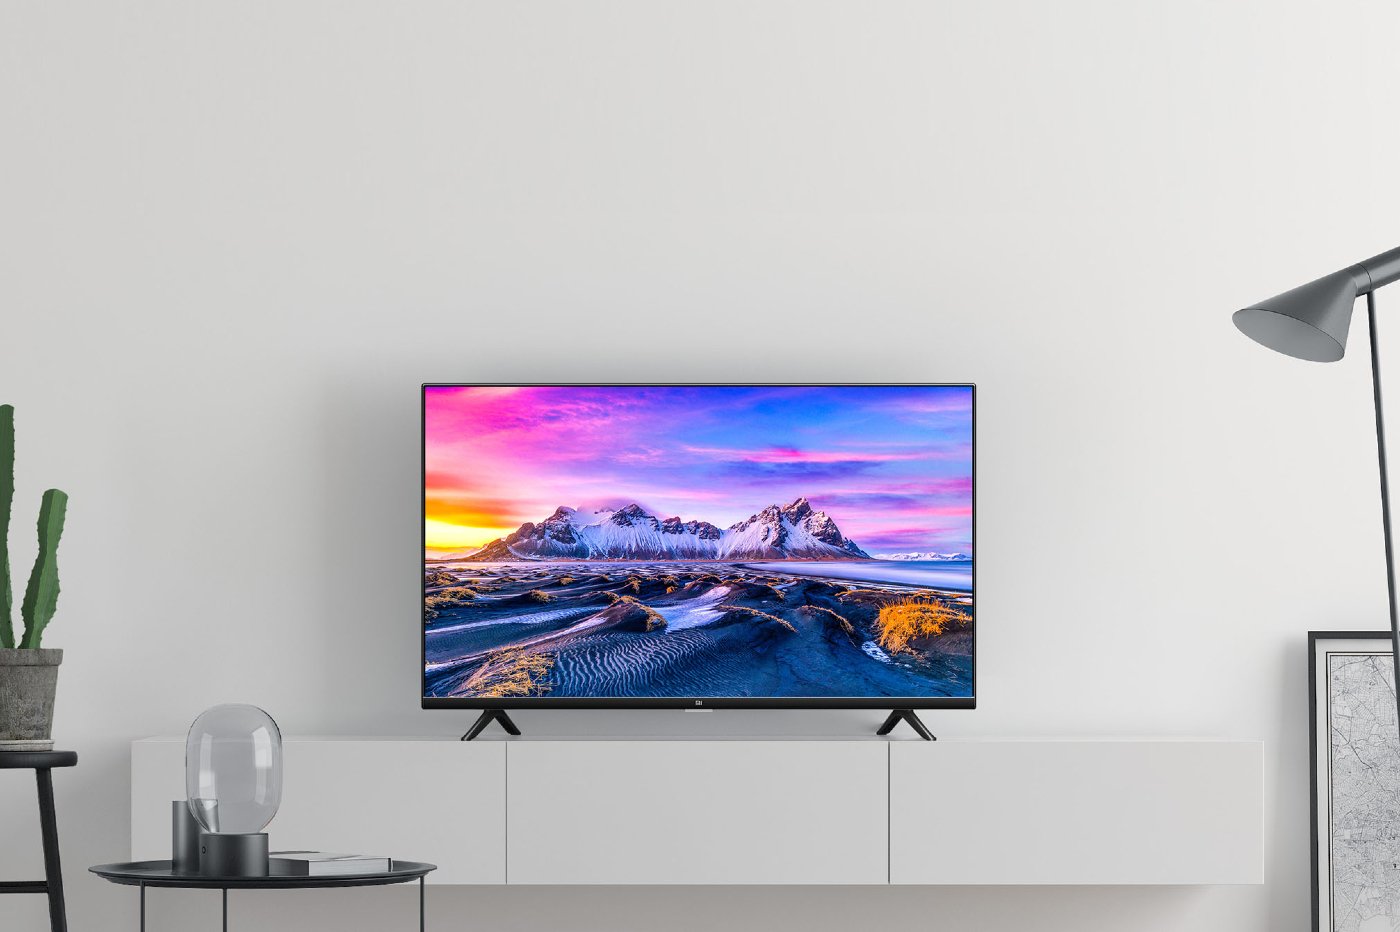 Xiaomi Mi Smart TV P1 32 pouces eBay